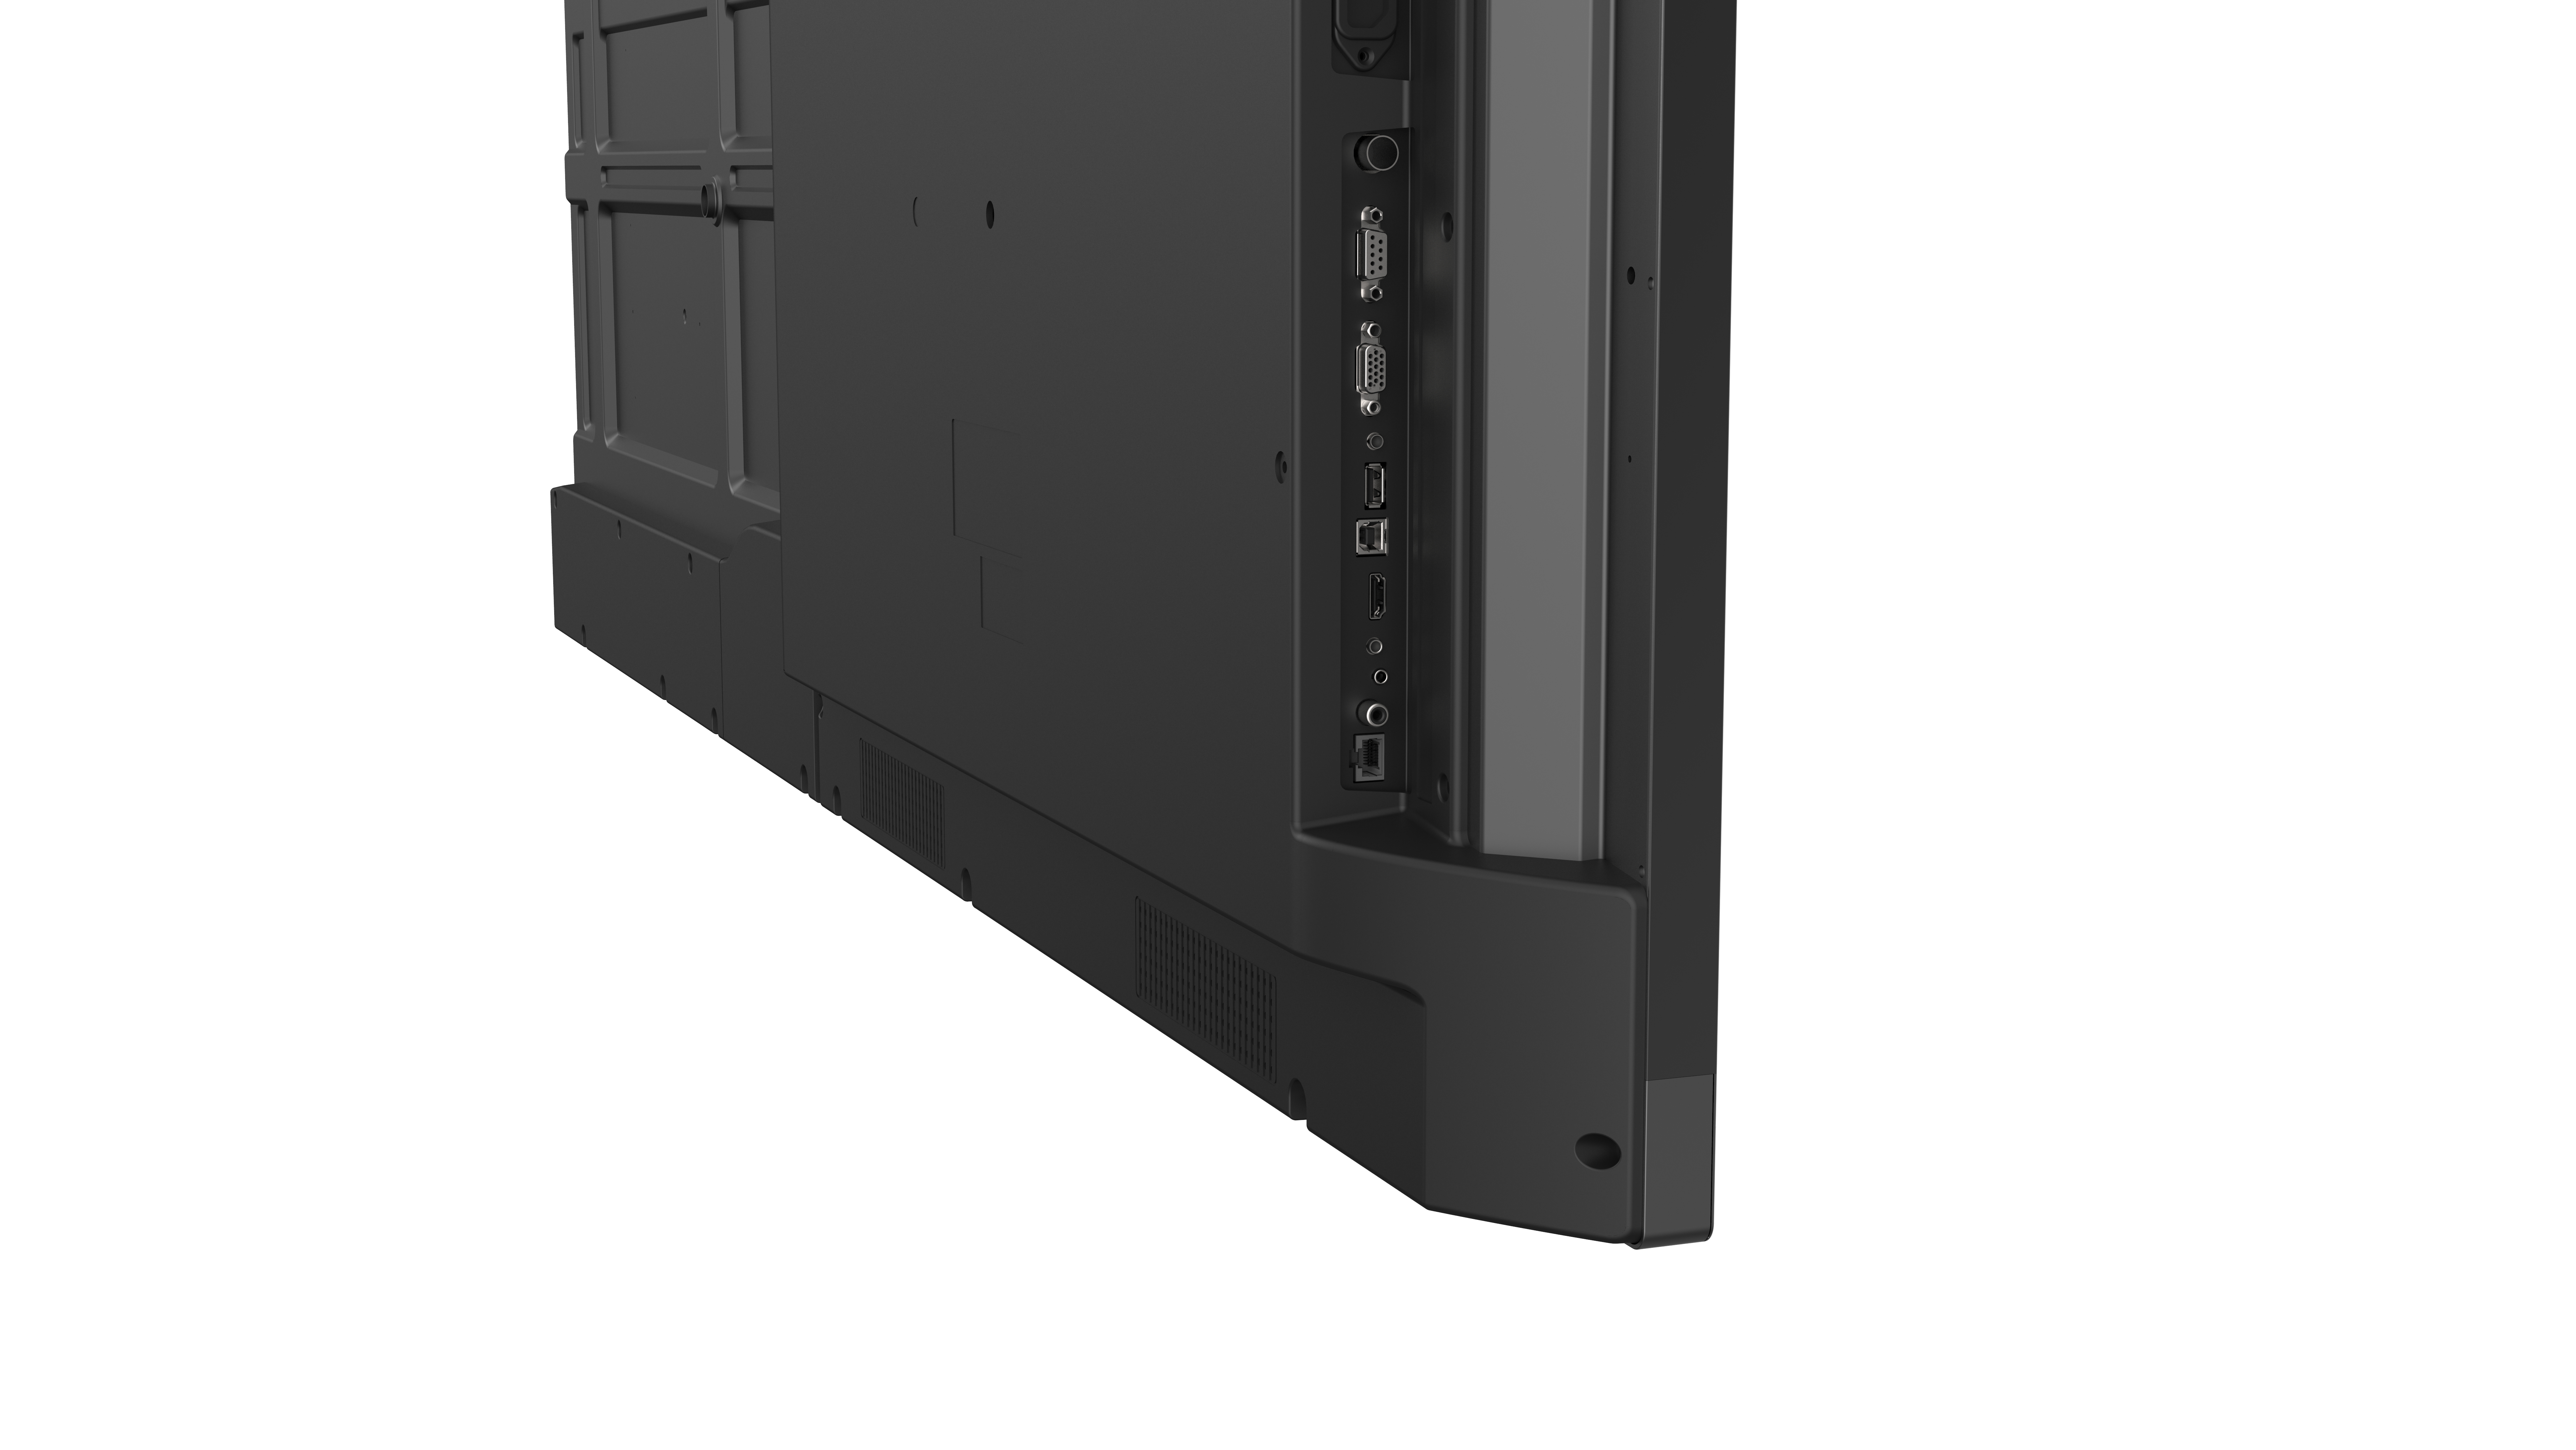 Hisense 86WR6BE - 86 inch - 370 cd/m² - Ultra HD - 3840x2160 pixels - 20 point - Advanced Interactive Display